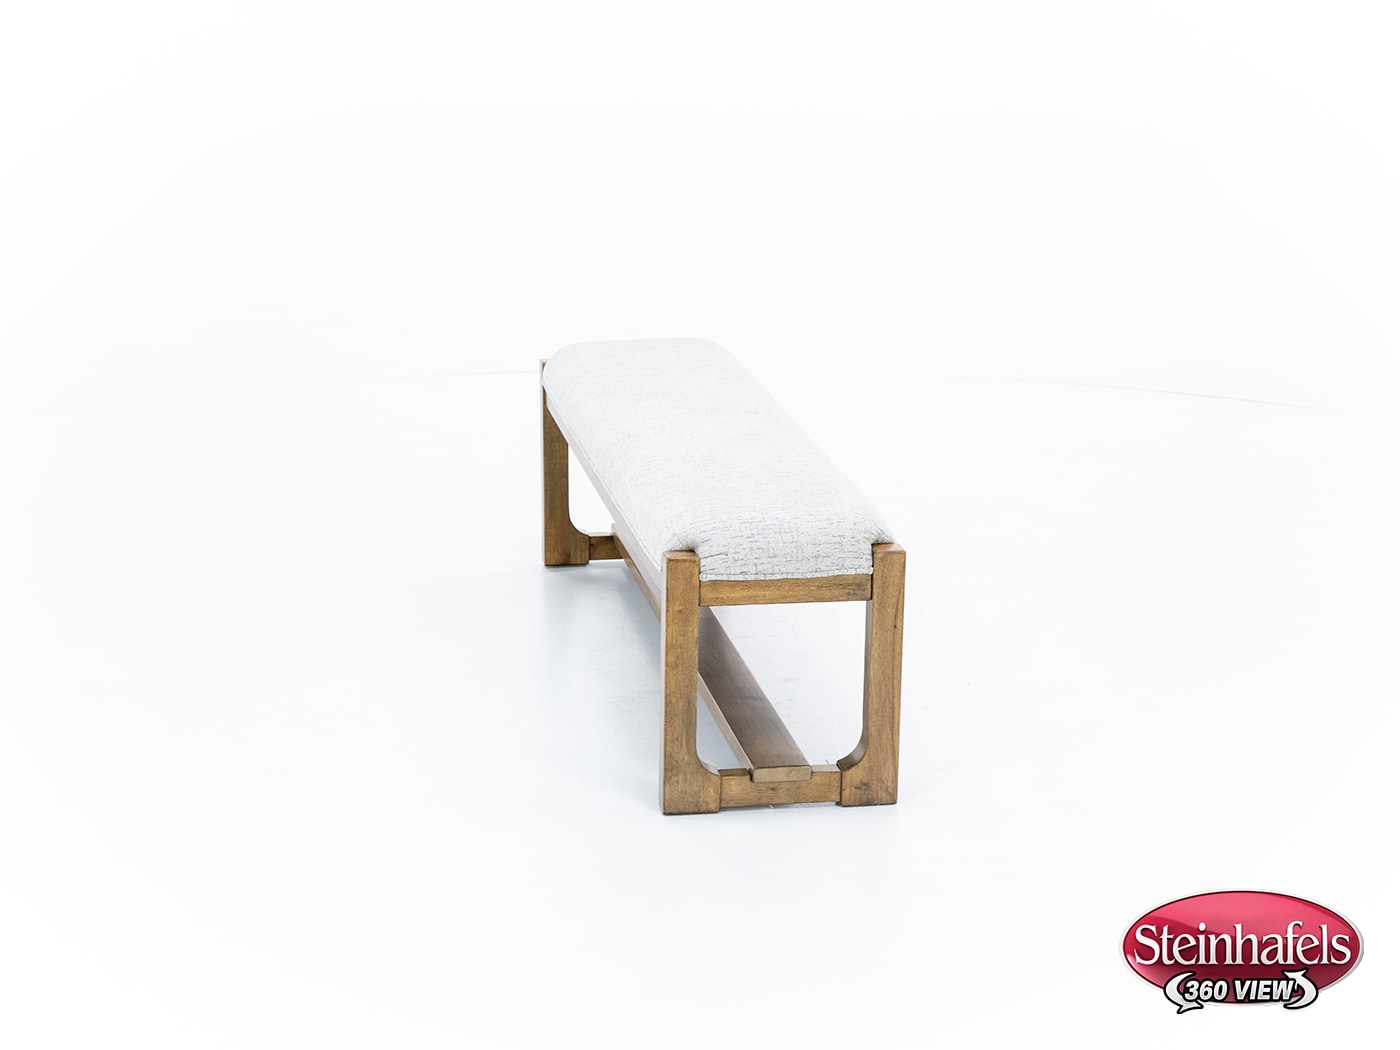 ashy wood grain inch standard seat height bench  image   